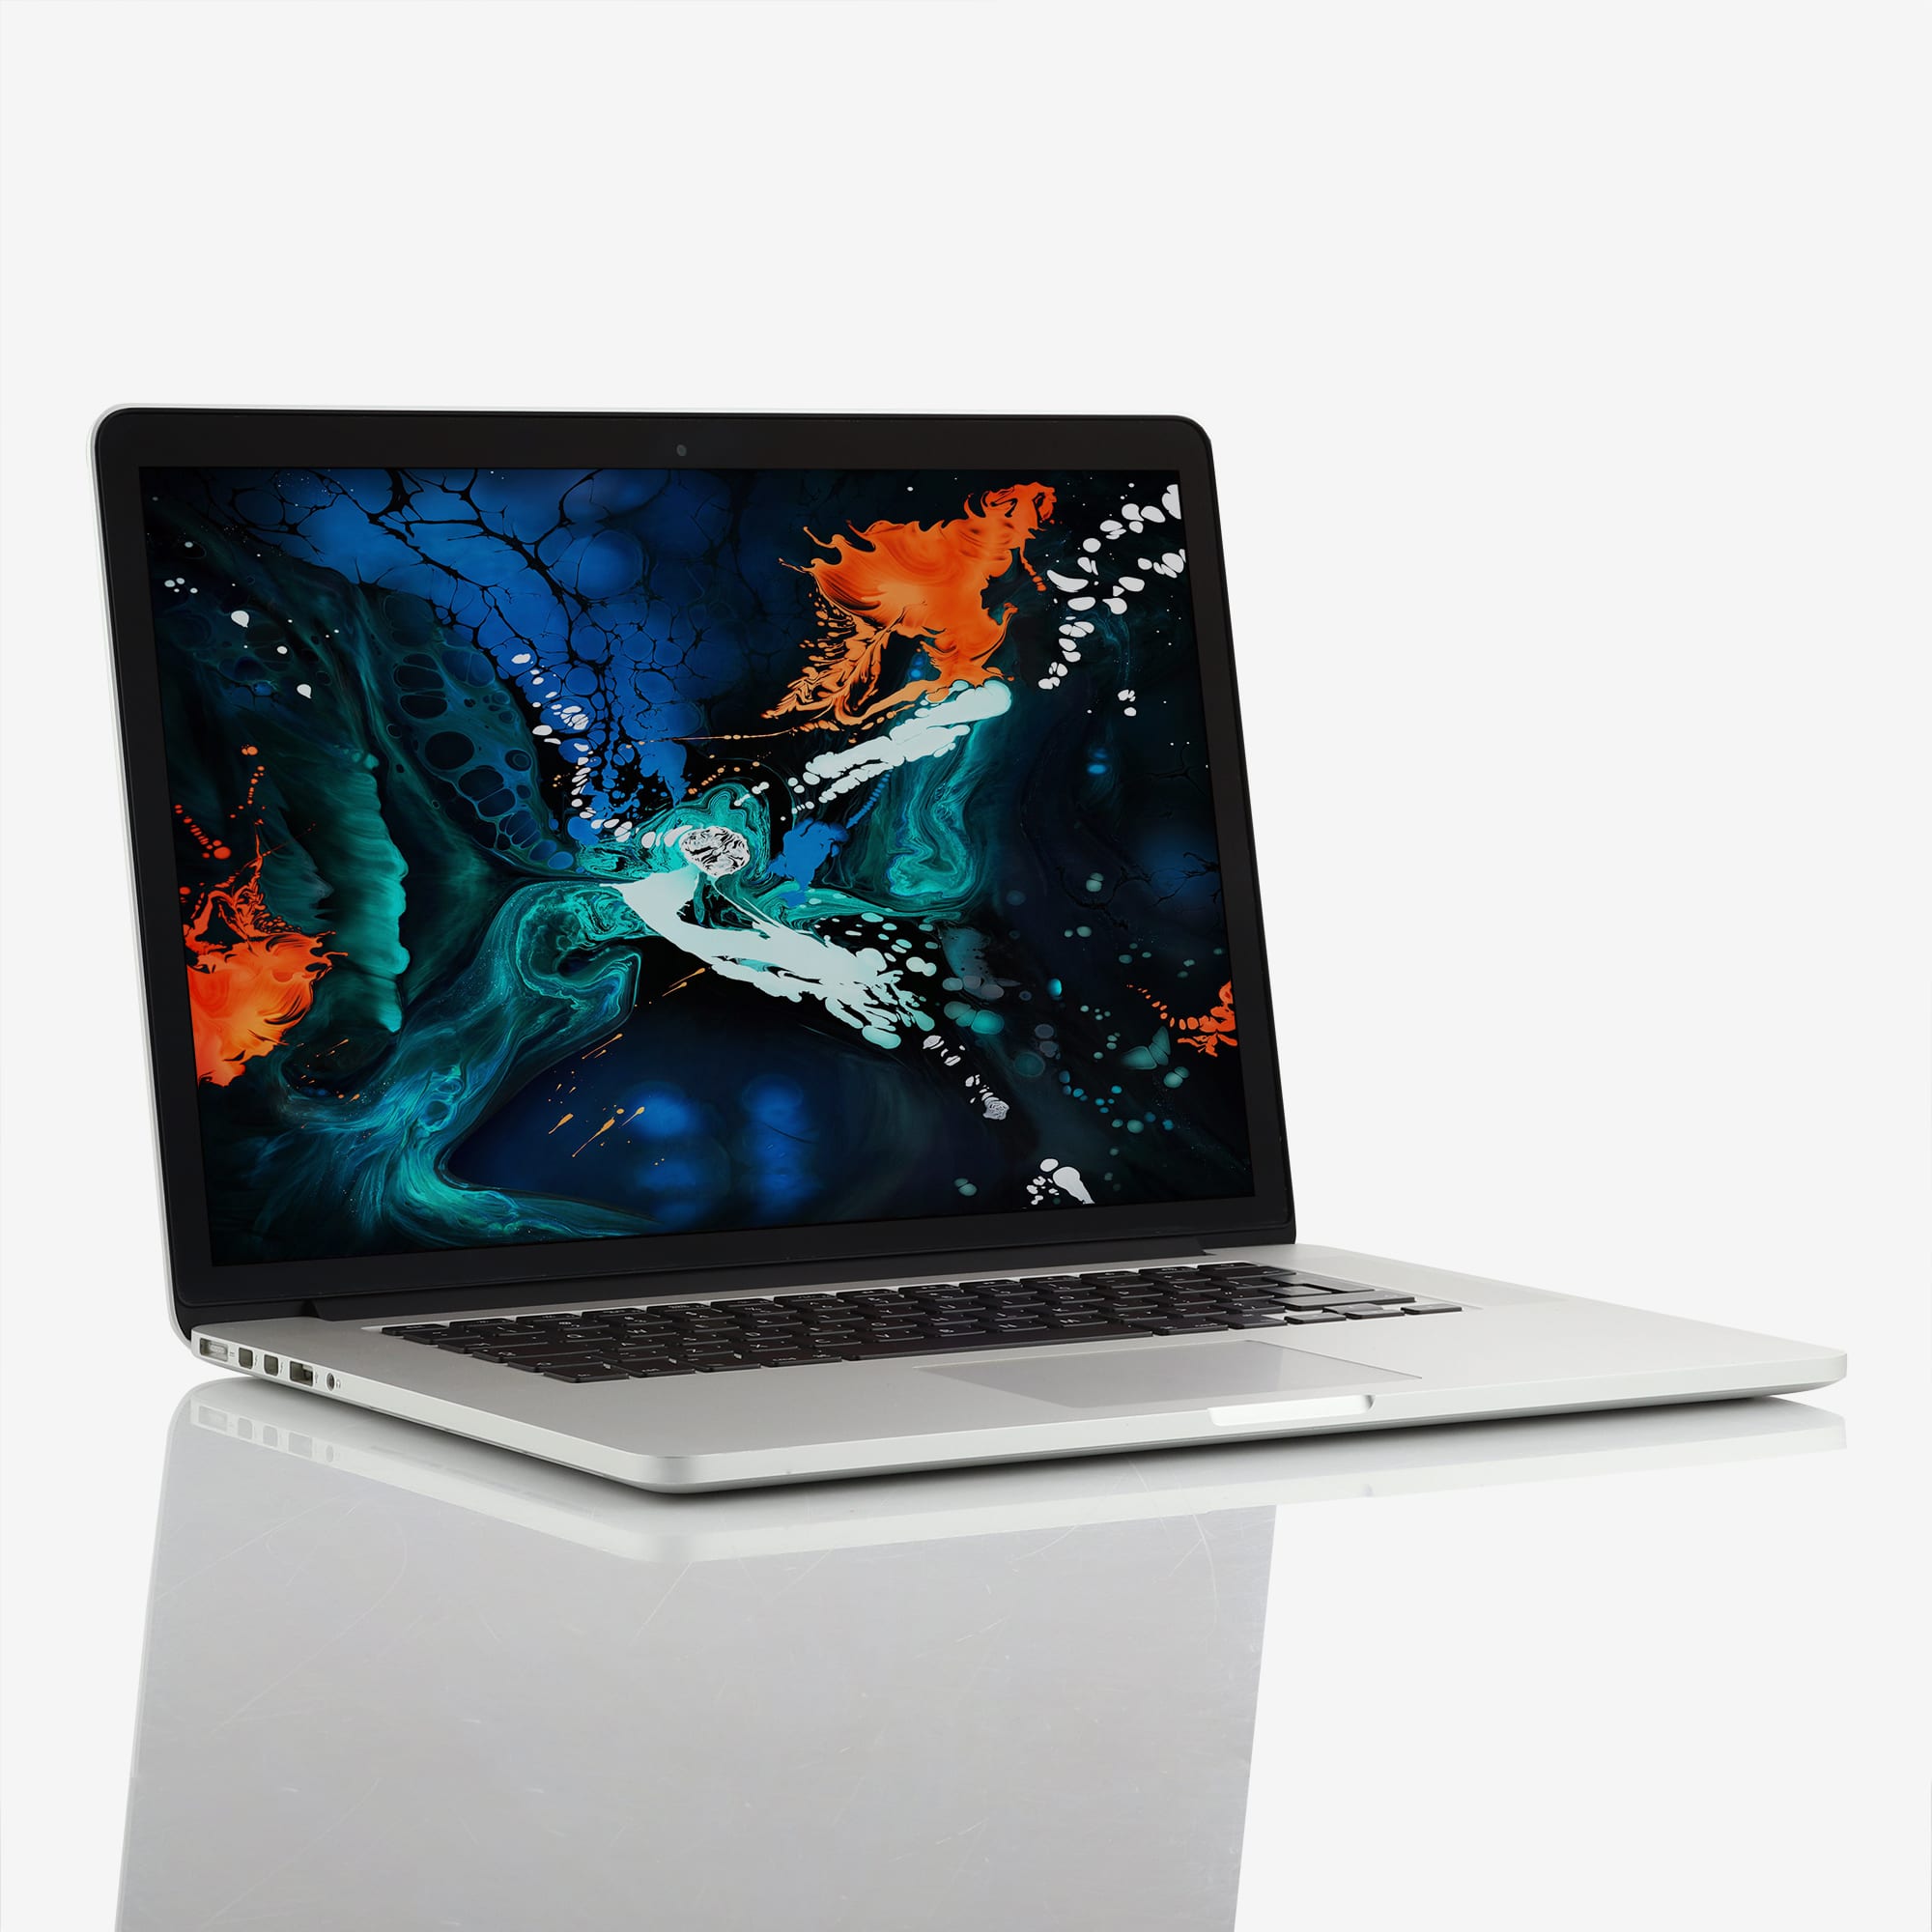 1 x Apple MacBook Pro Retina 15 Inch Quad Core i7 2.50 GHz (2015)